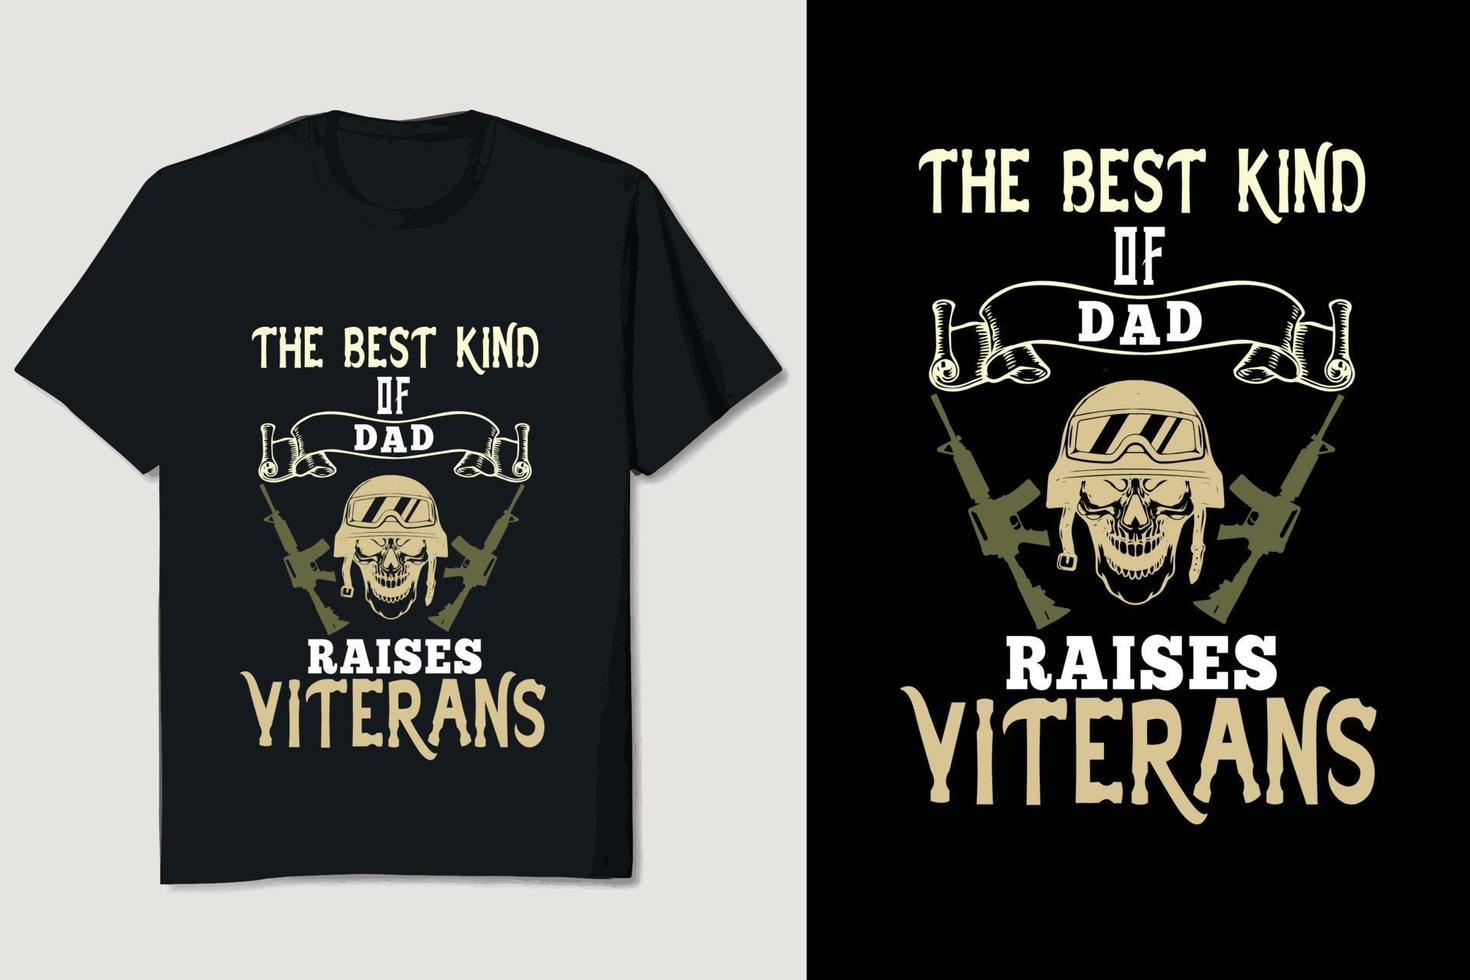 Veteran T-shirt Design vector